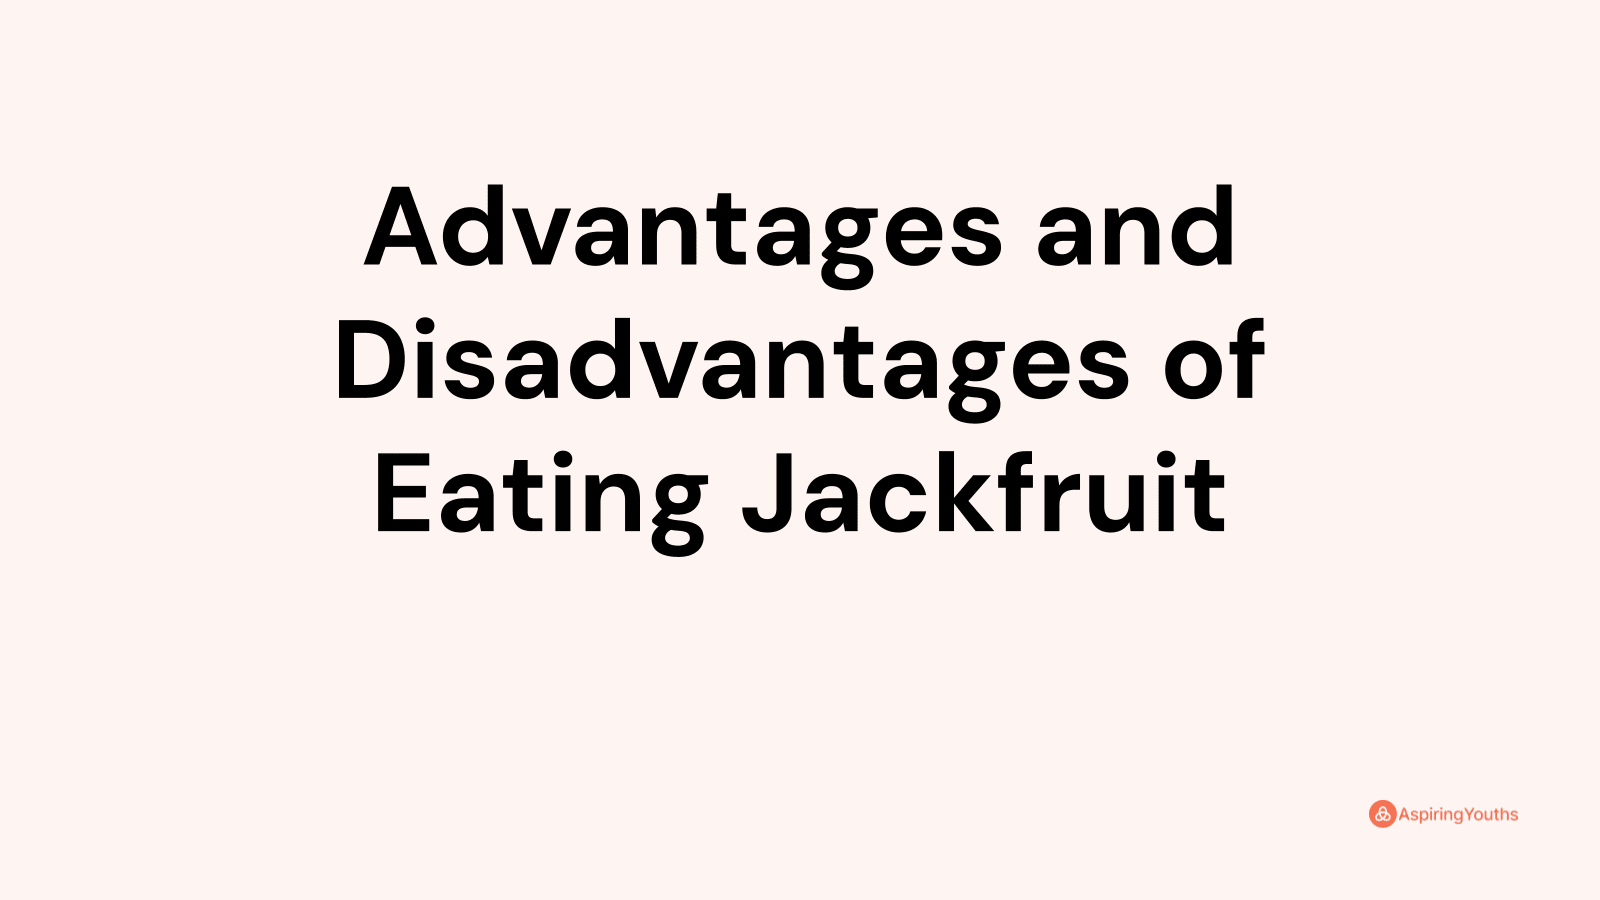 Advantages and disadvantages of Eating Jackfruit